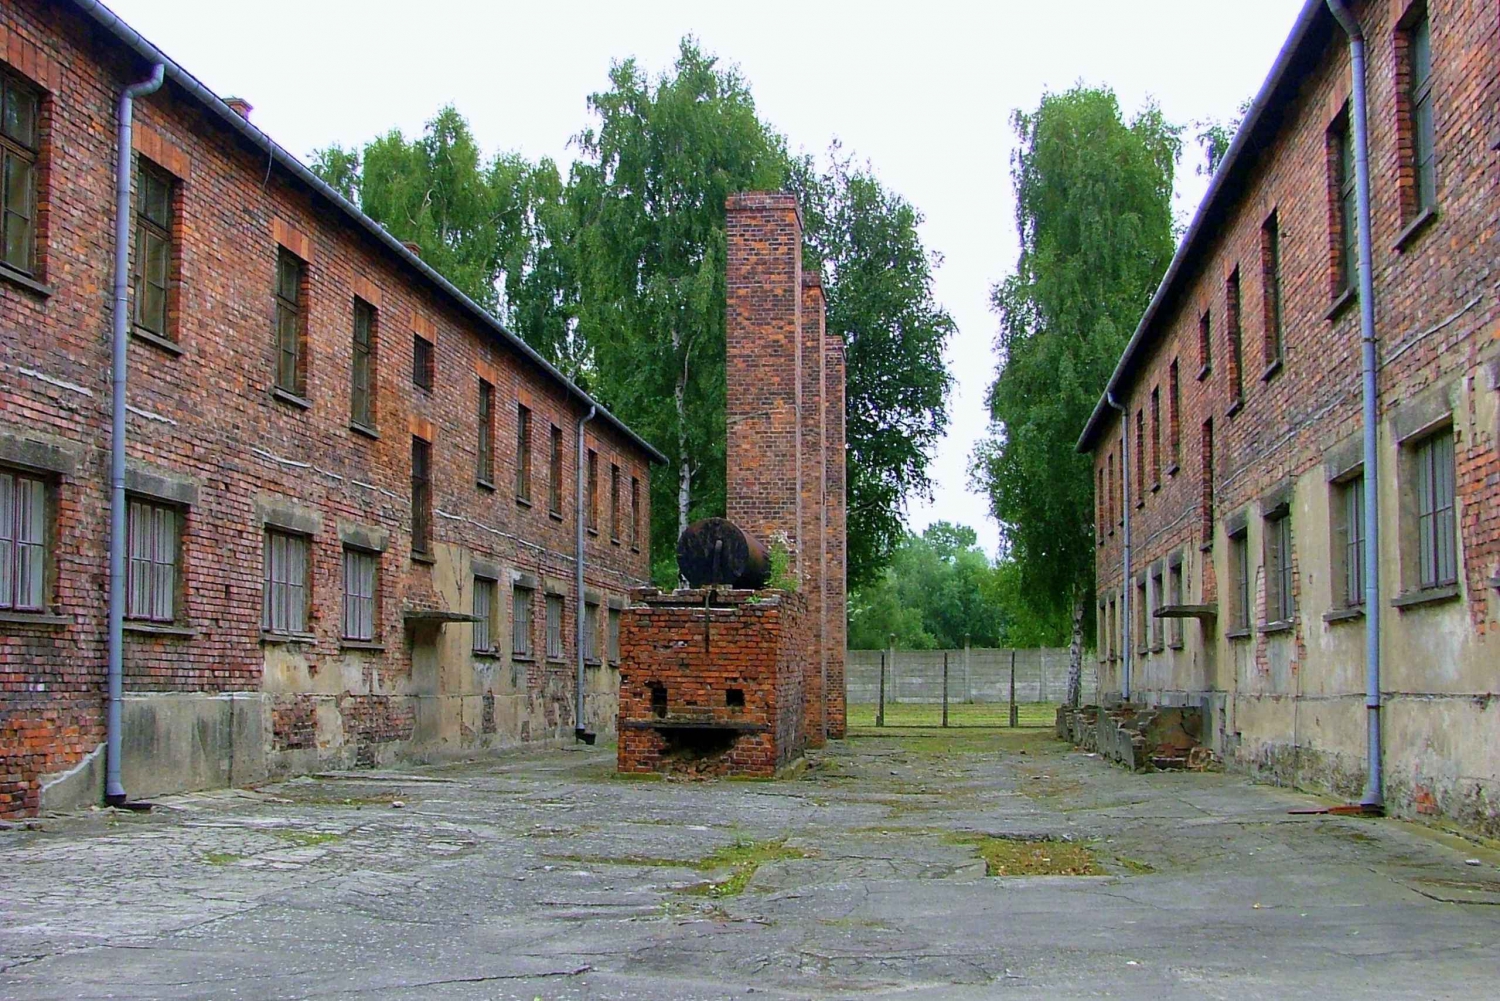 From Warsaw: Full day guided trip to Auschwitz-Birkenau